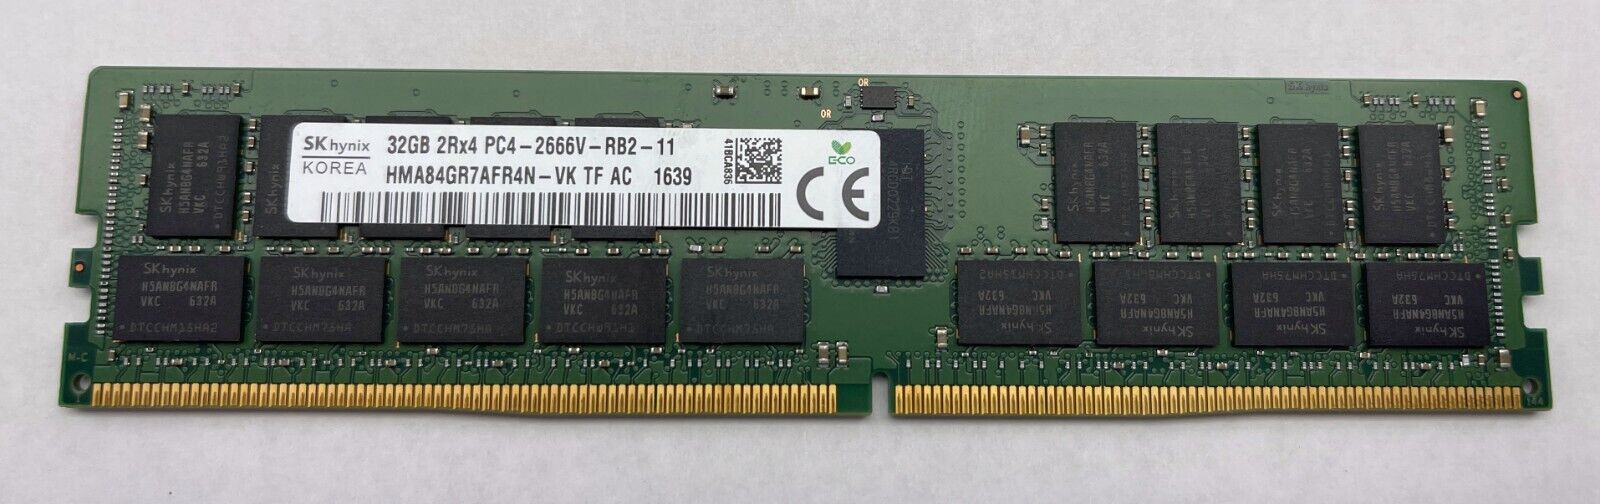 Hynix 32GB 2Rx4 PC4-2666V-RB2-11 DIMM Server Memory HMA84GR7AFR4N-VK TF AC 1639